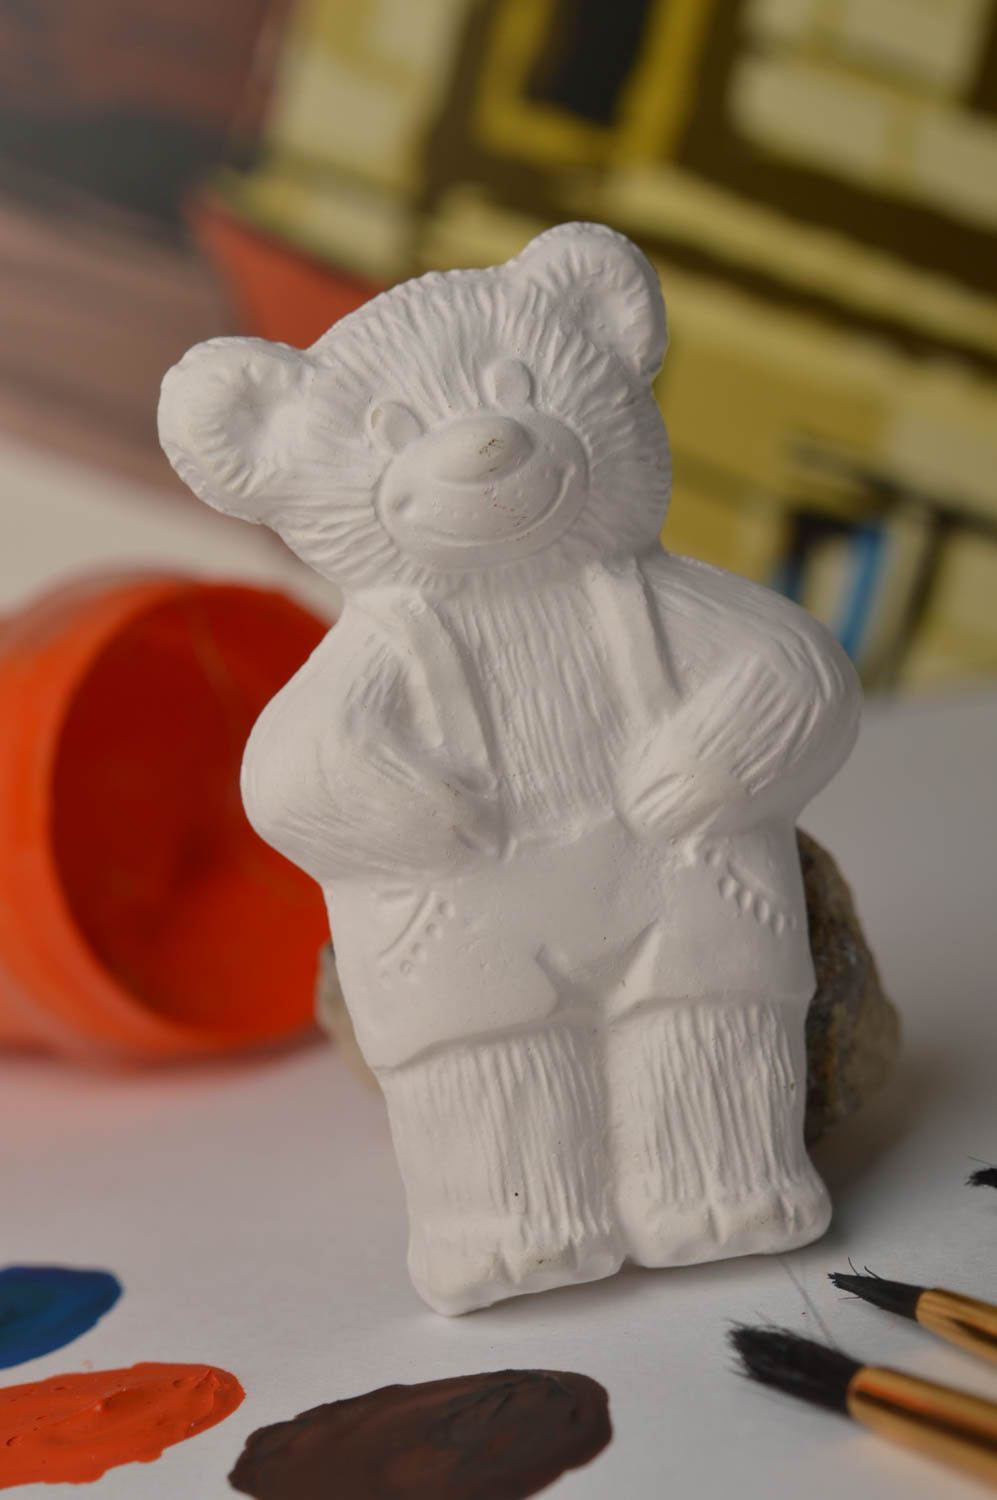 Handmade figurine unusual magnet for fridge blank for creativity gift ideas photo 1